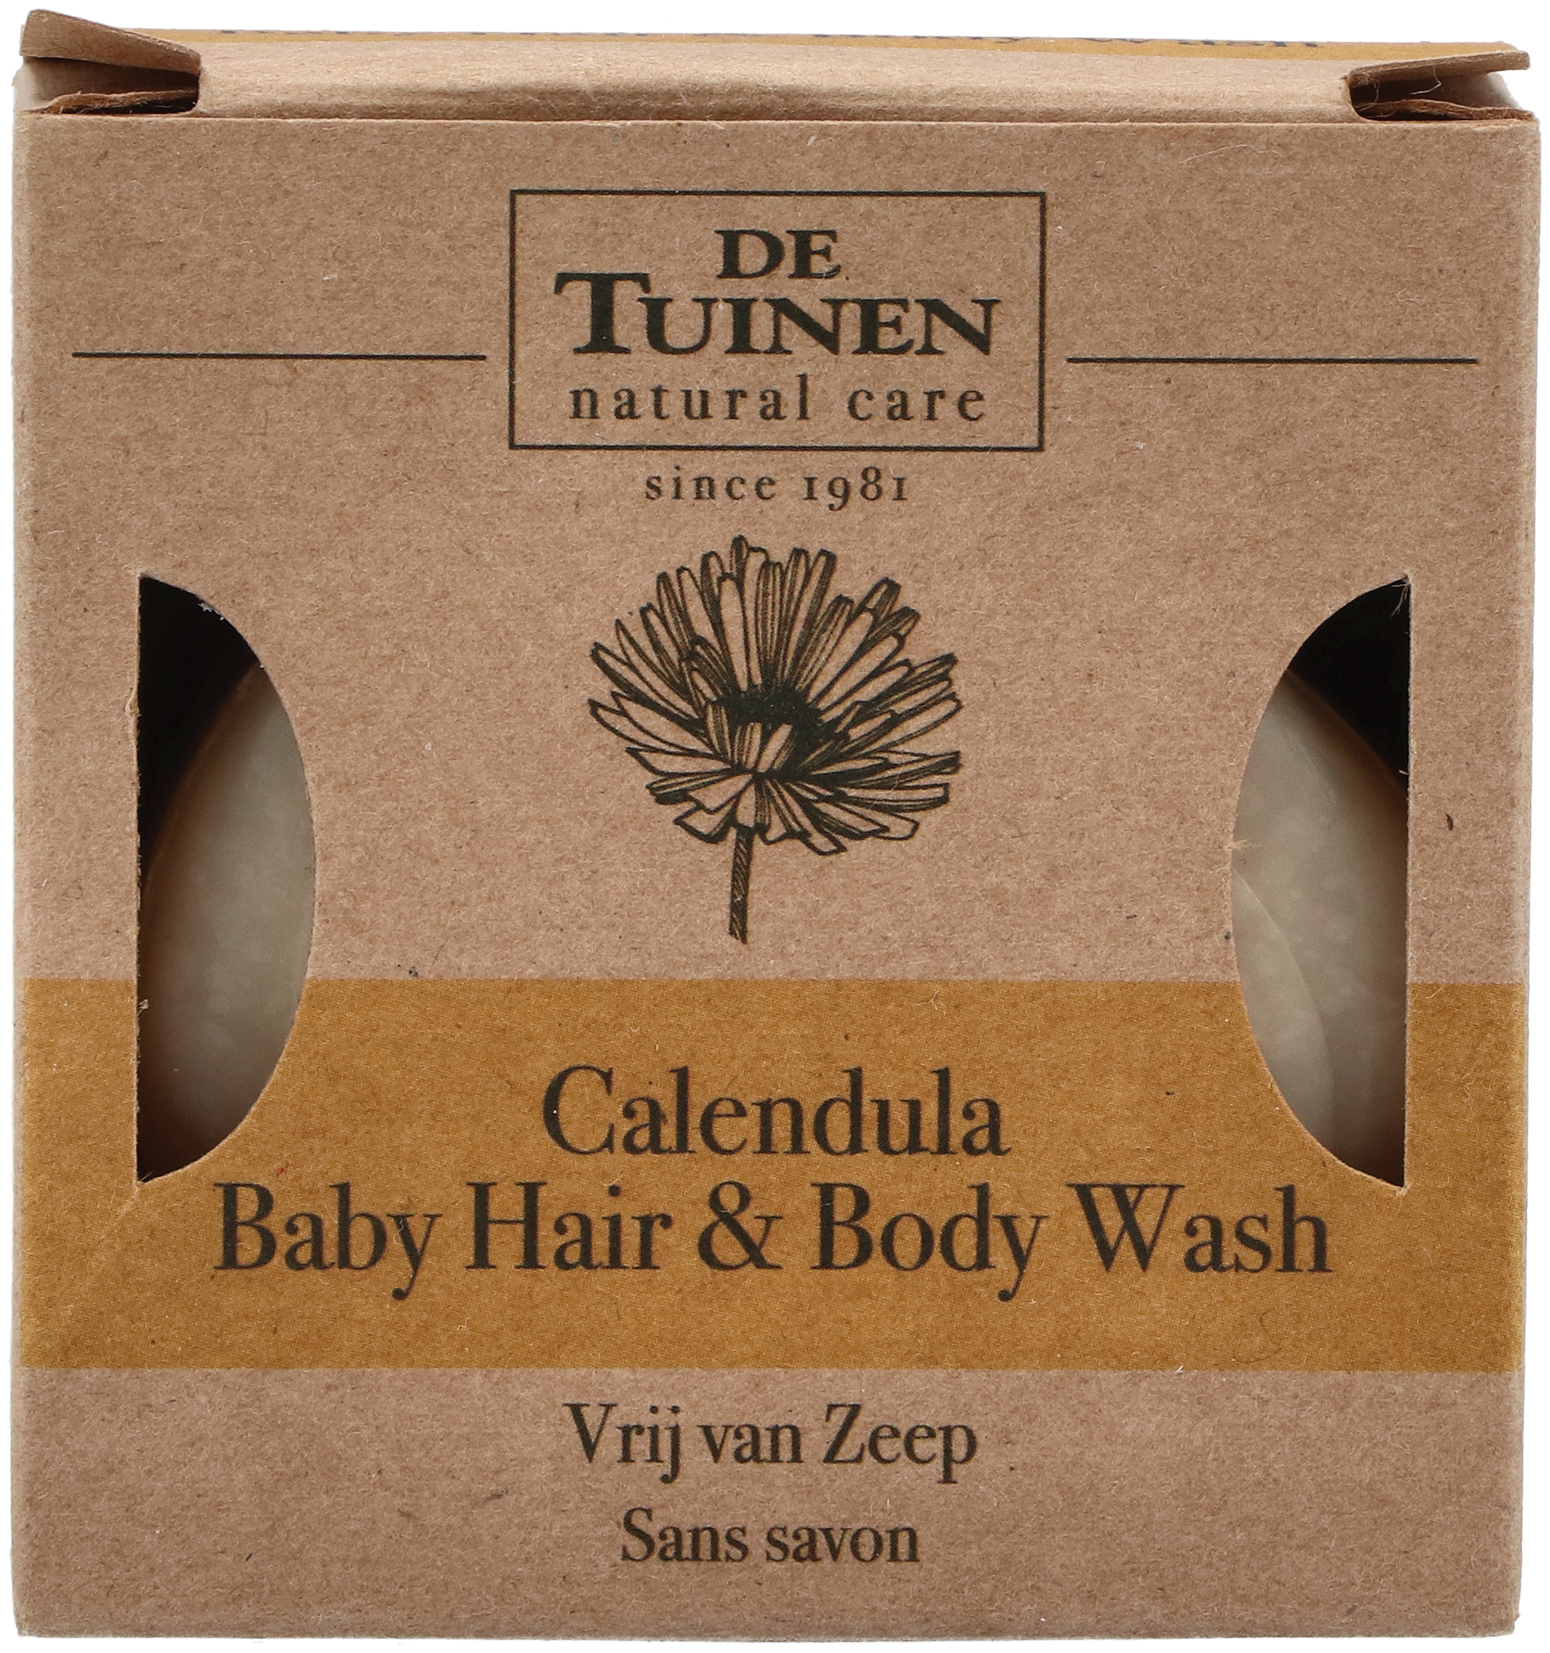 SimplyPR - a lifestyle PR agency - Holland & Barrett - Holland & presenteert: natuurlijke duurzame Soap Bars van De Tuinen